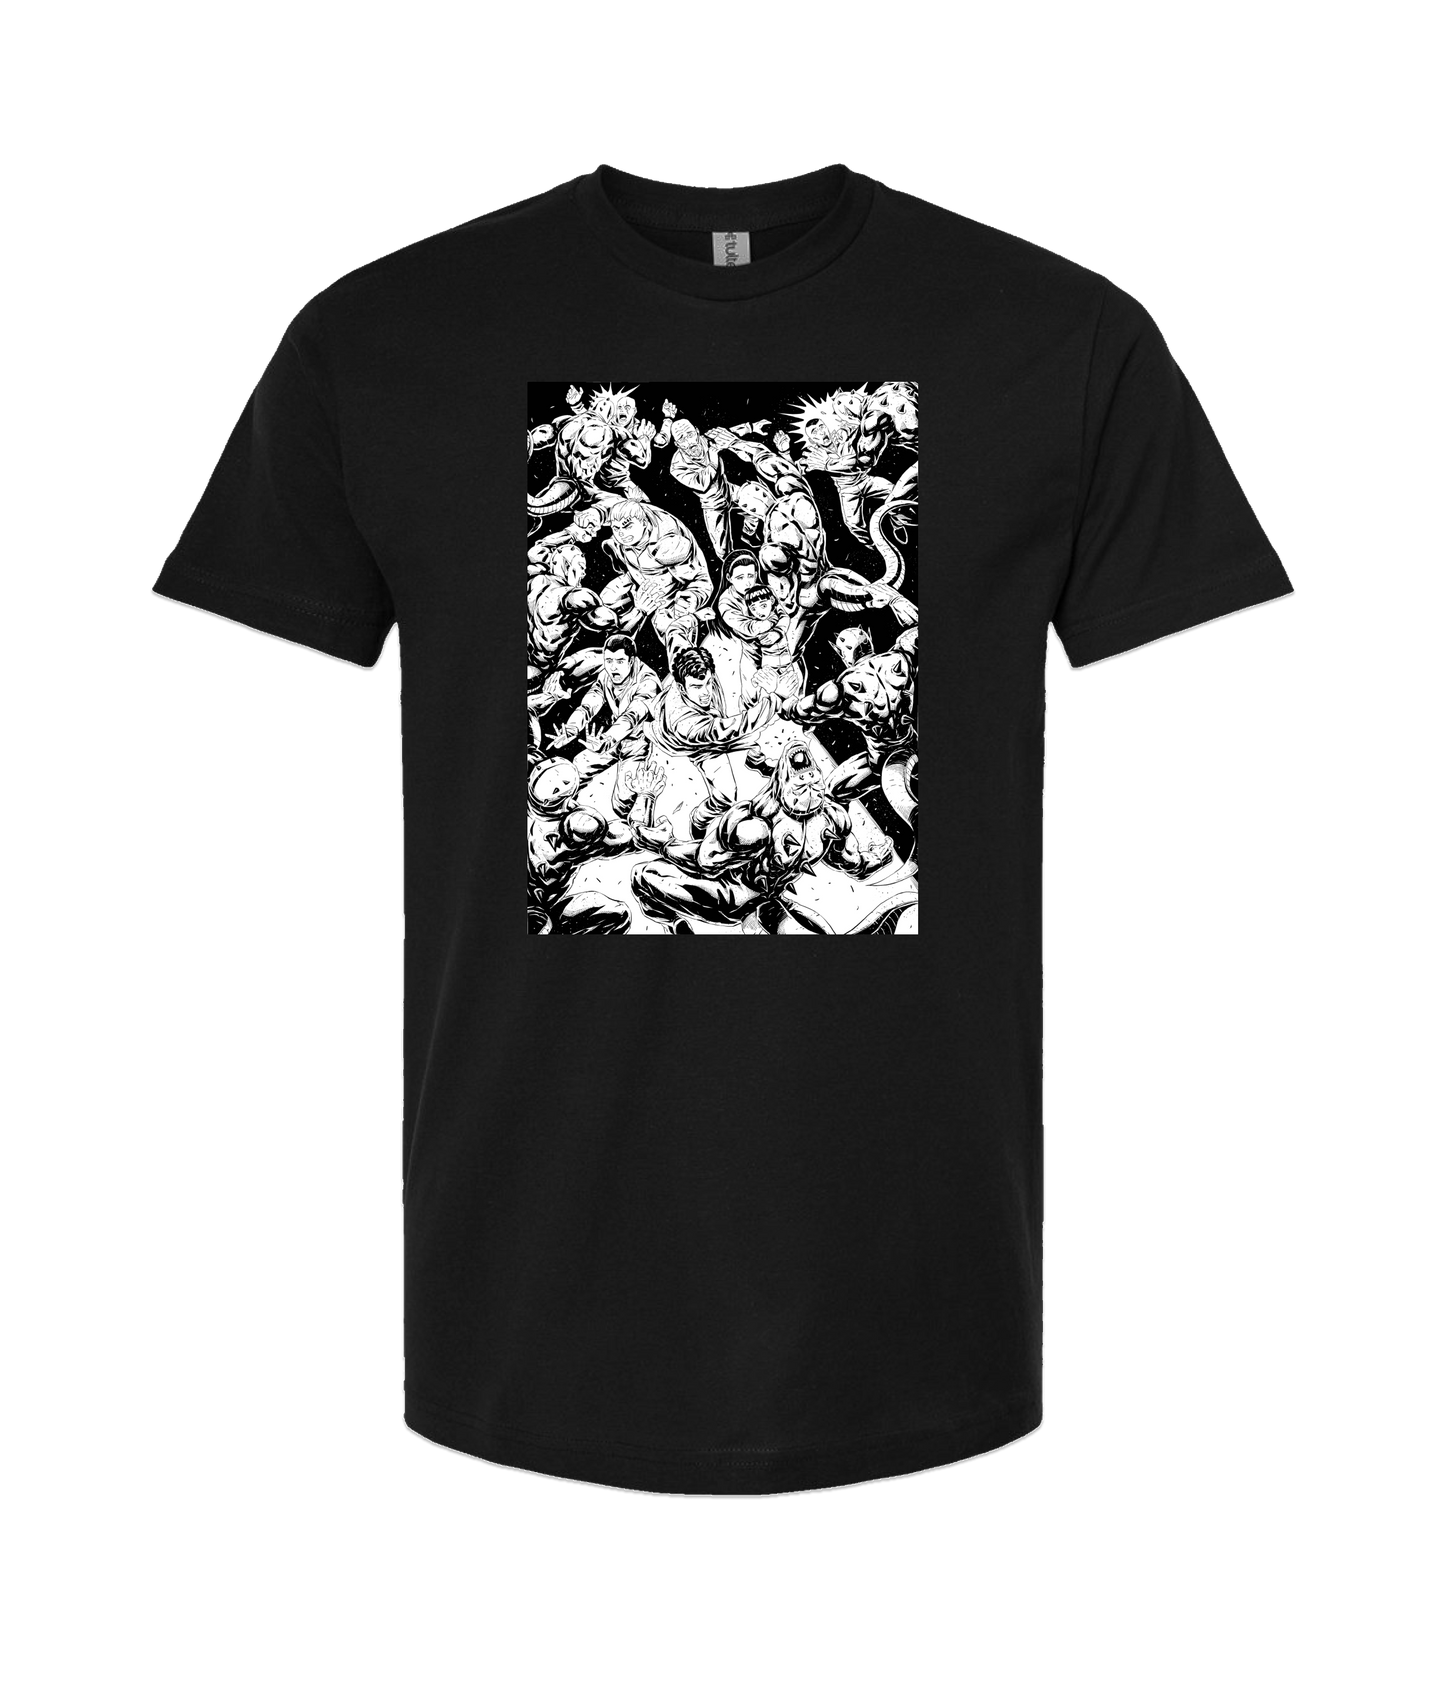 Cherrycorp - THE BIG FIGHT - Black T Shirt